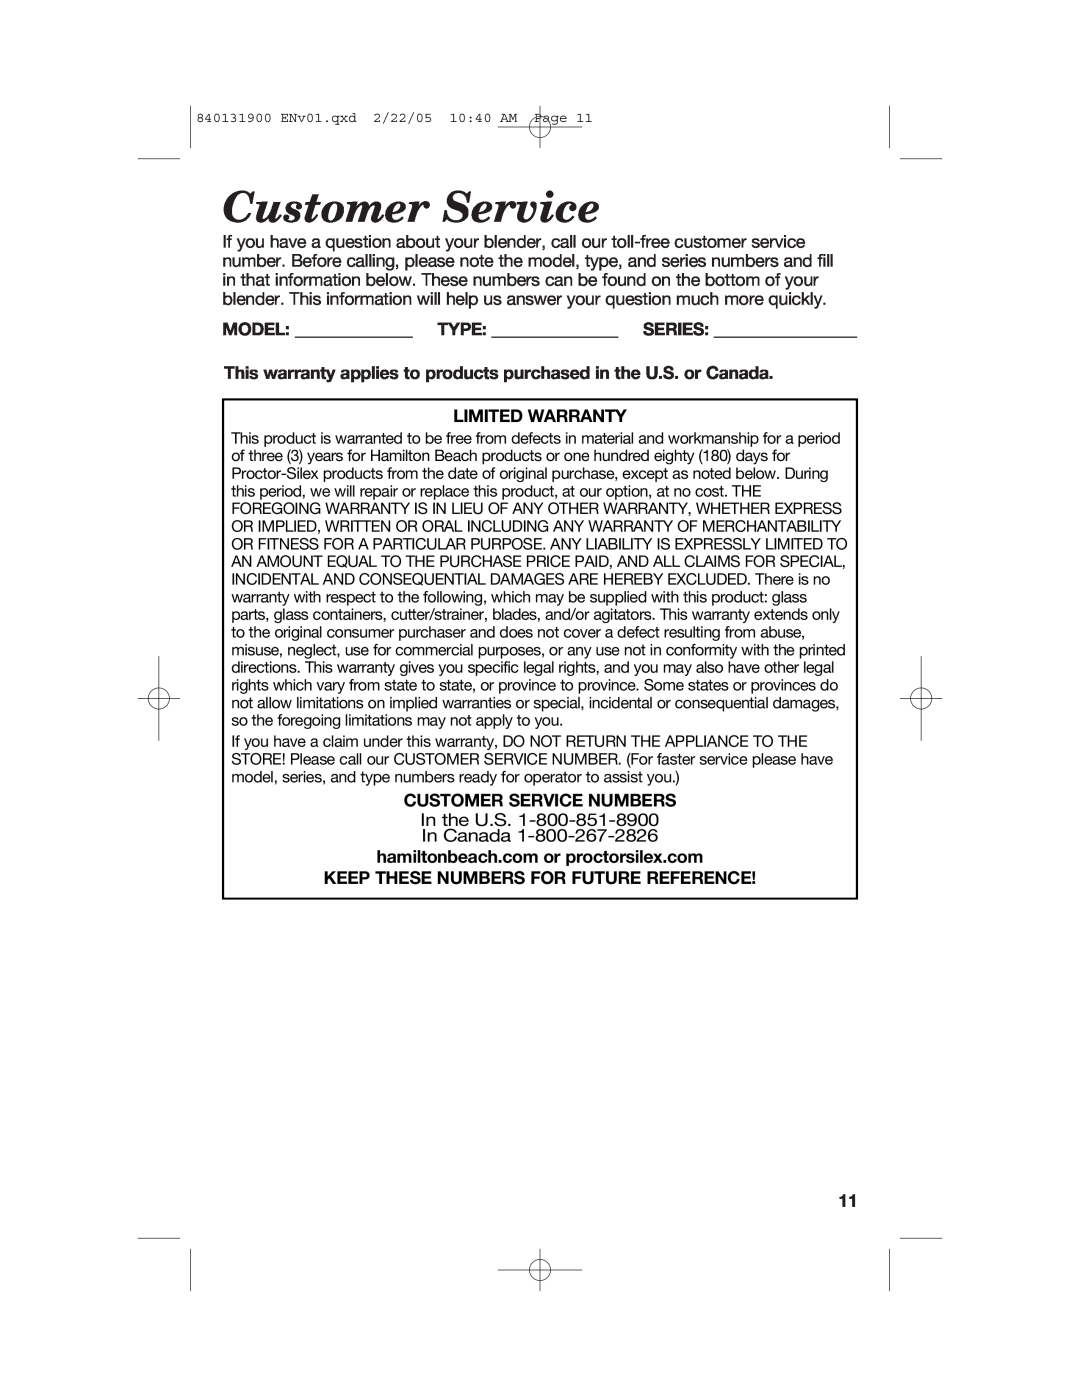 Hamilton Beach 50754C manual Model Type Series, Limited Warranty, Customer Service Numbers 